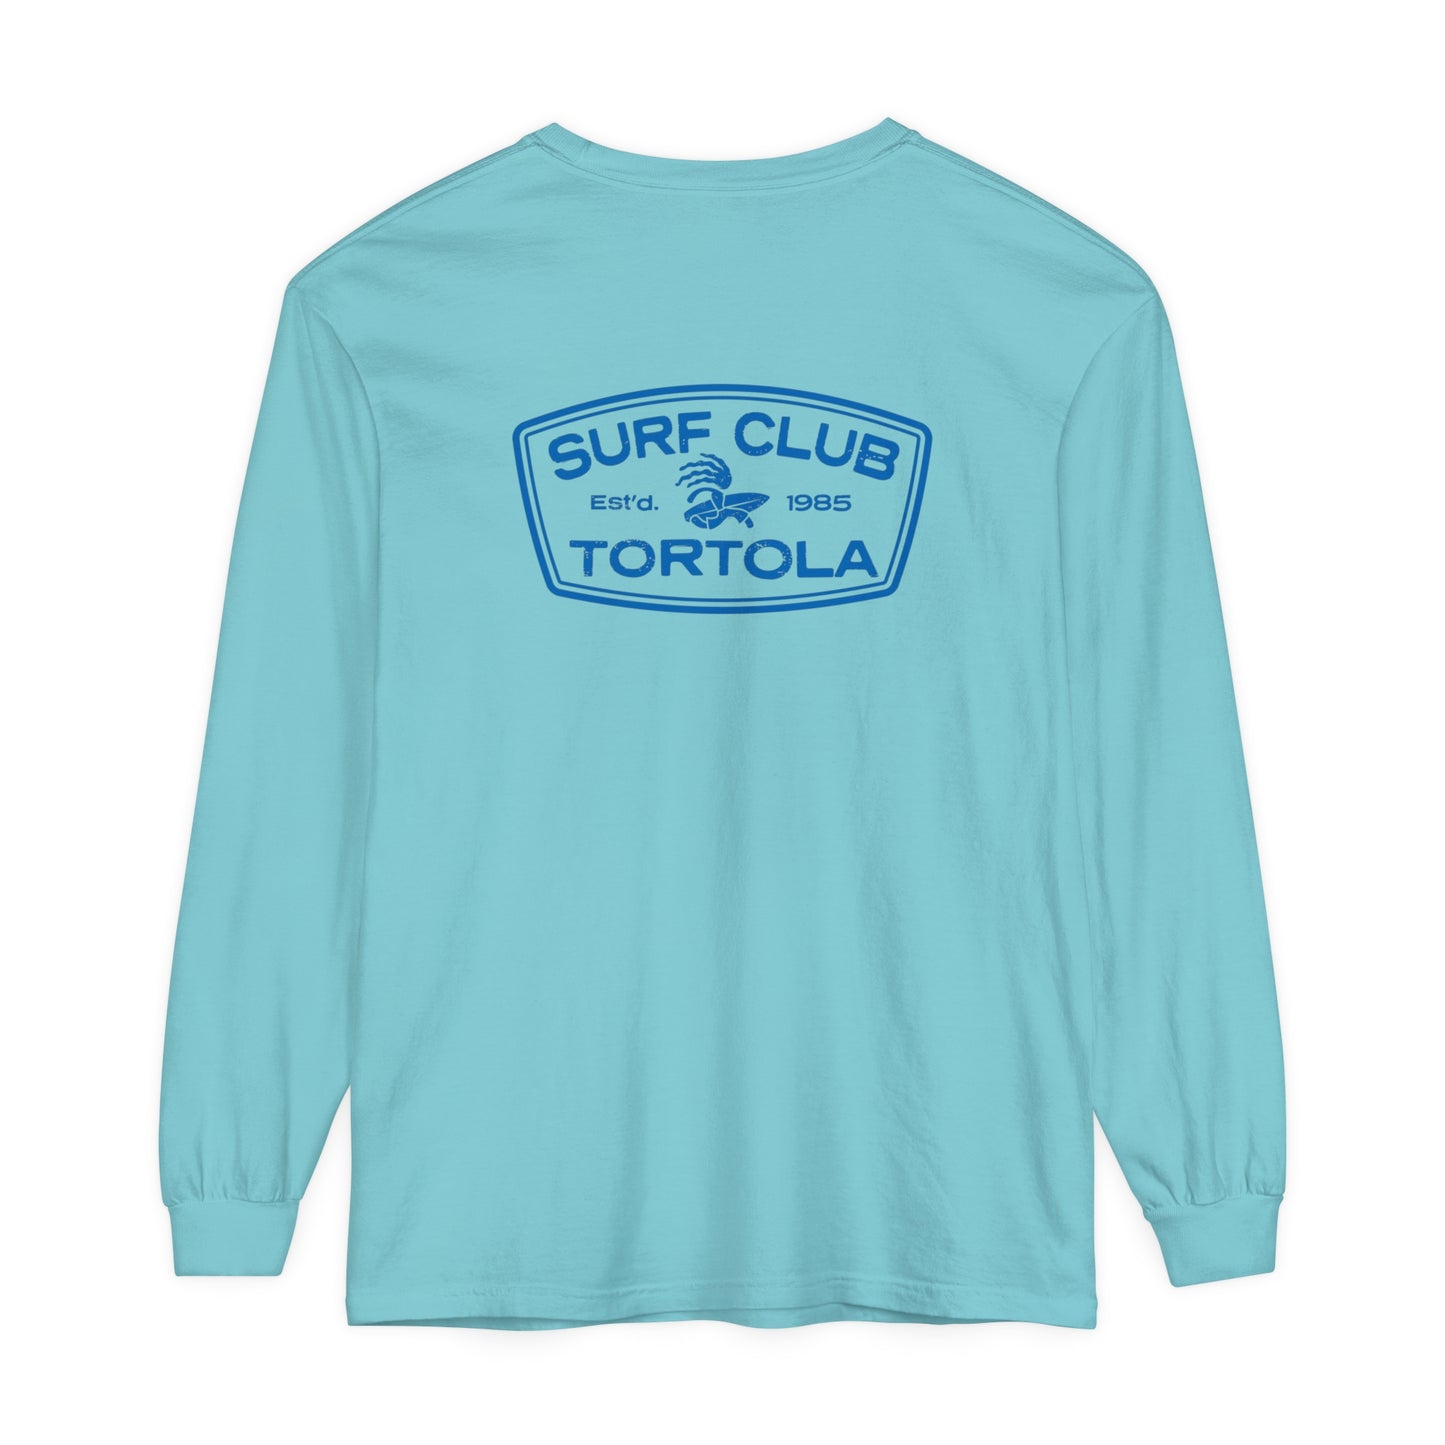 "Surf Club Tortola" Unisex L/S Garment-Dyed T-Shirt